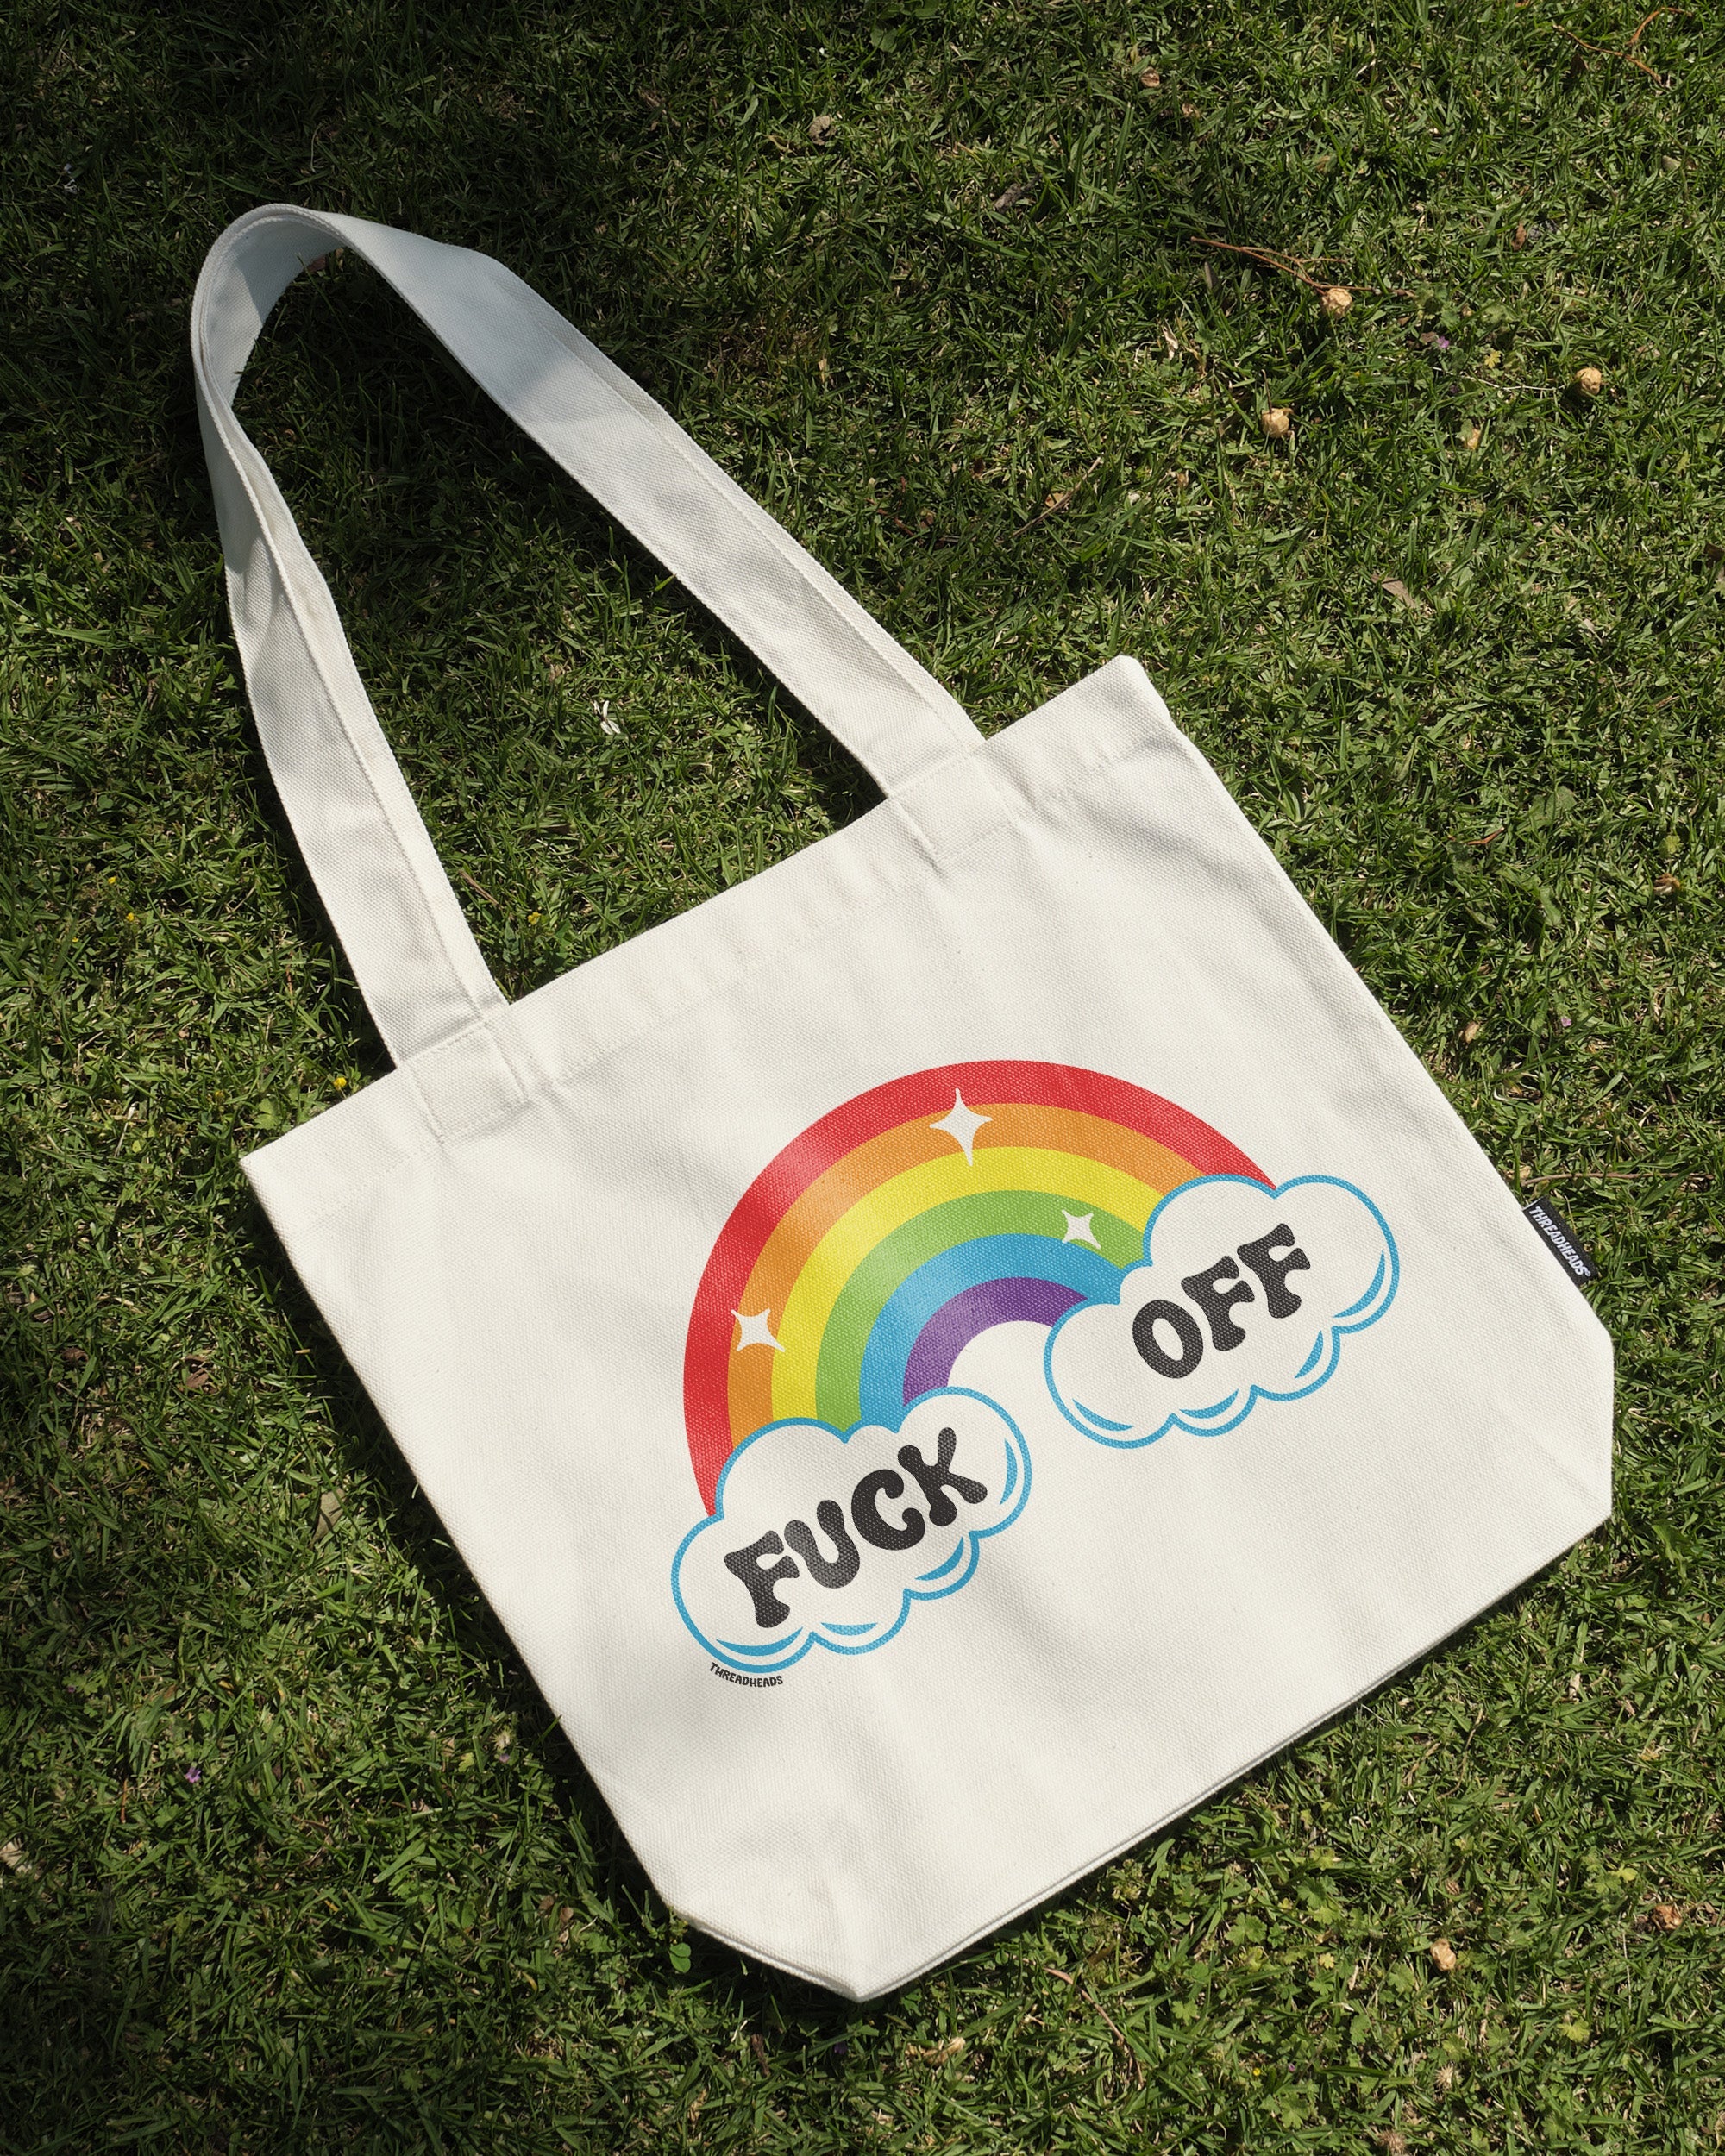 Fk Off Rainbow Tote Bag Australia Online Natural